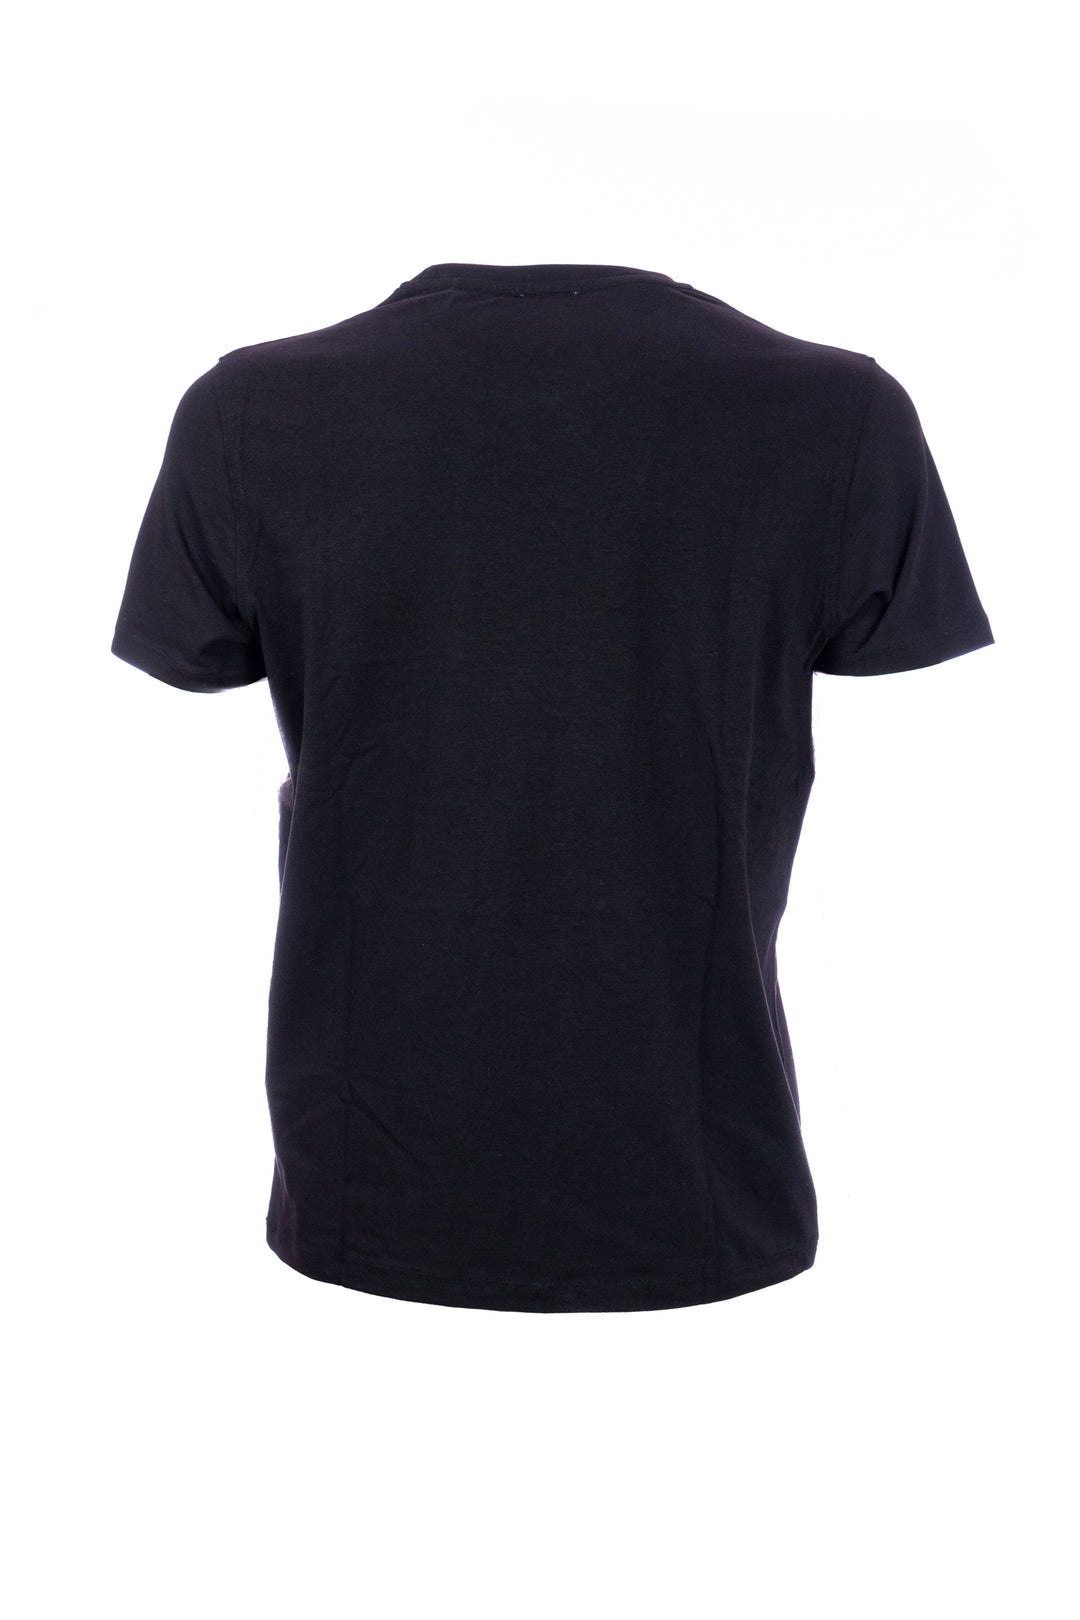 U.S. POLO ASSN. T-shirt nera tinta unita in cotone stretch con logo ricamato - Mancinelli 1954